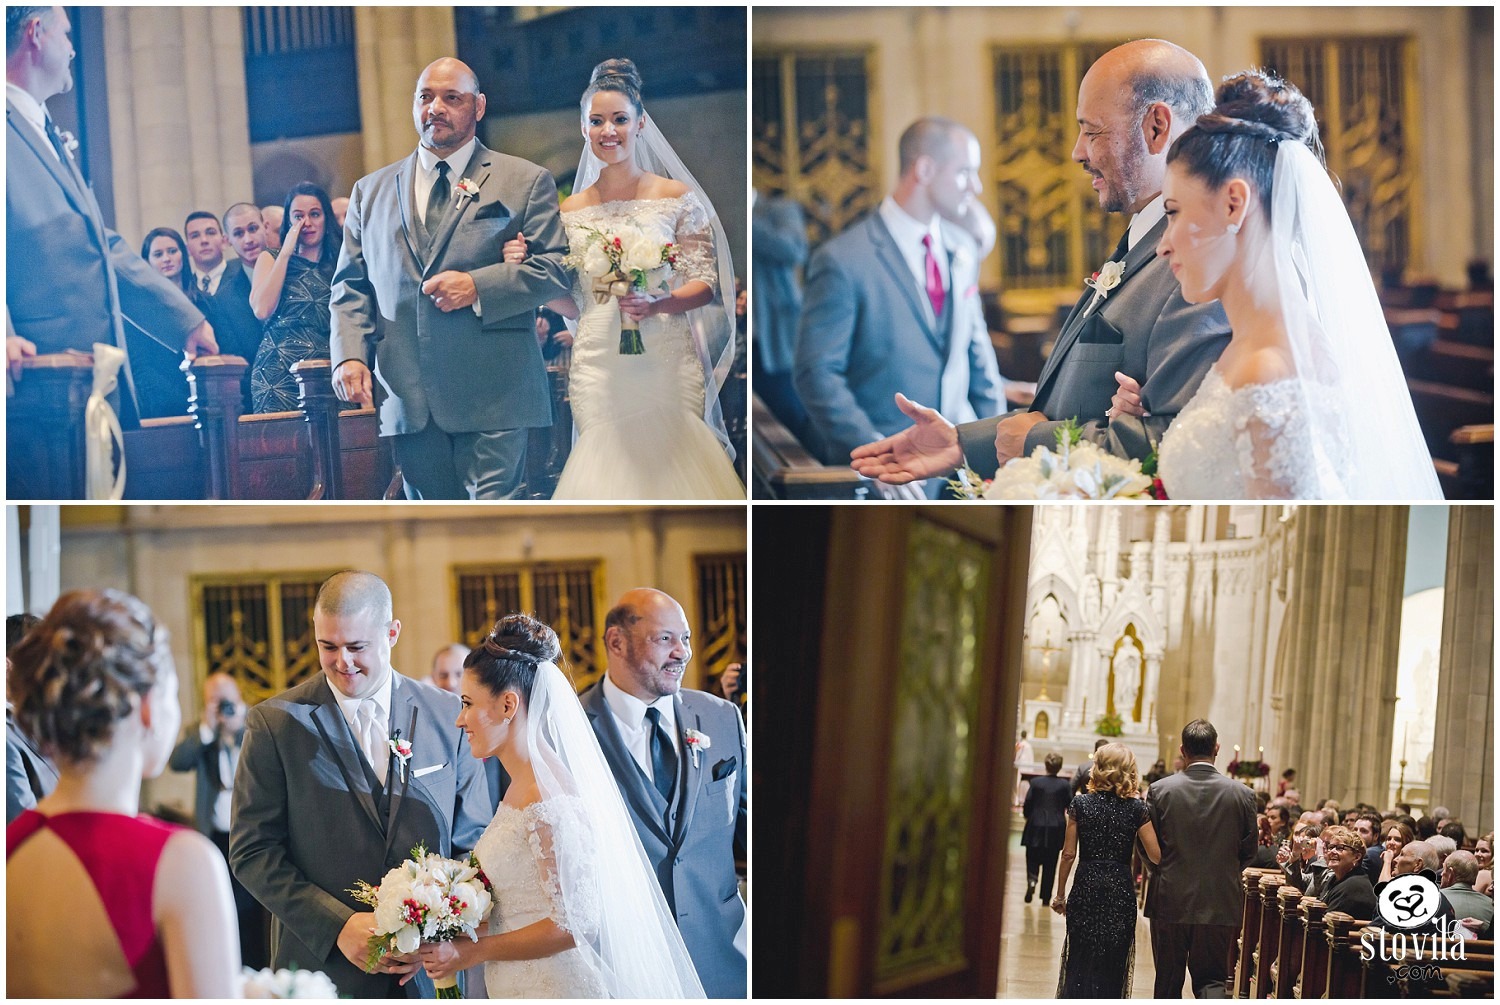 KB_Tirrell Room Wedding, Boston - Gate of Heaven Church - STOVILA Photography (16)